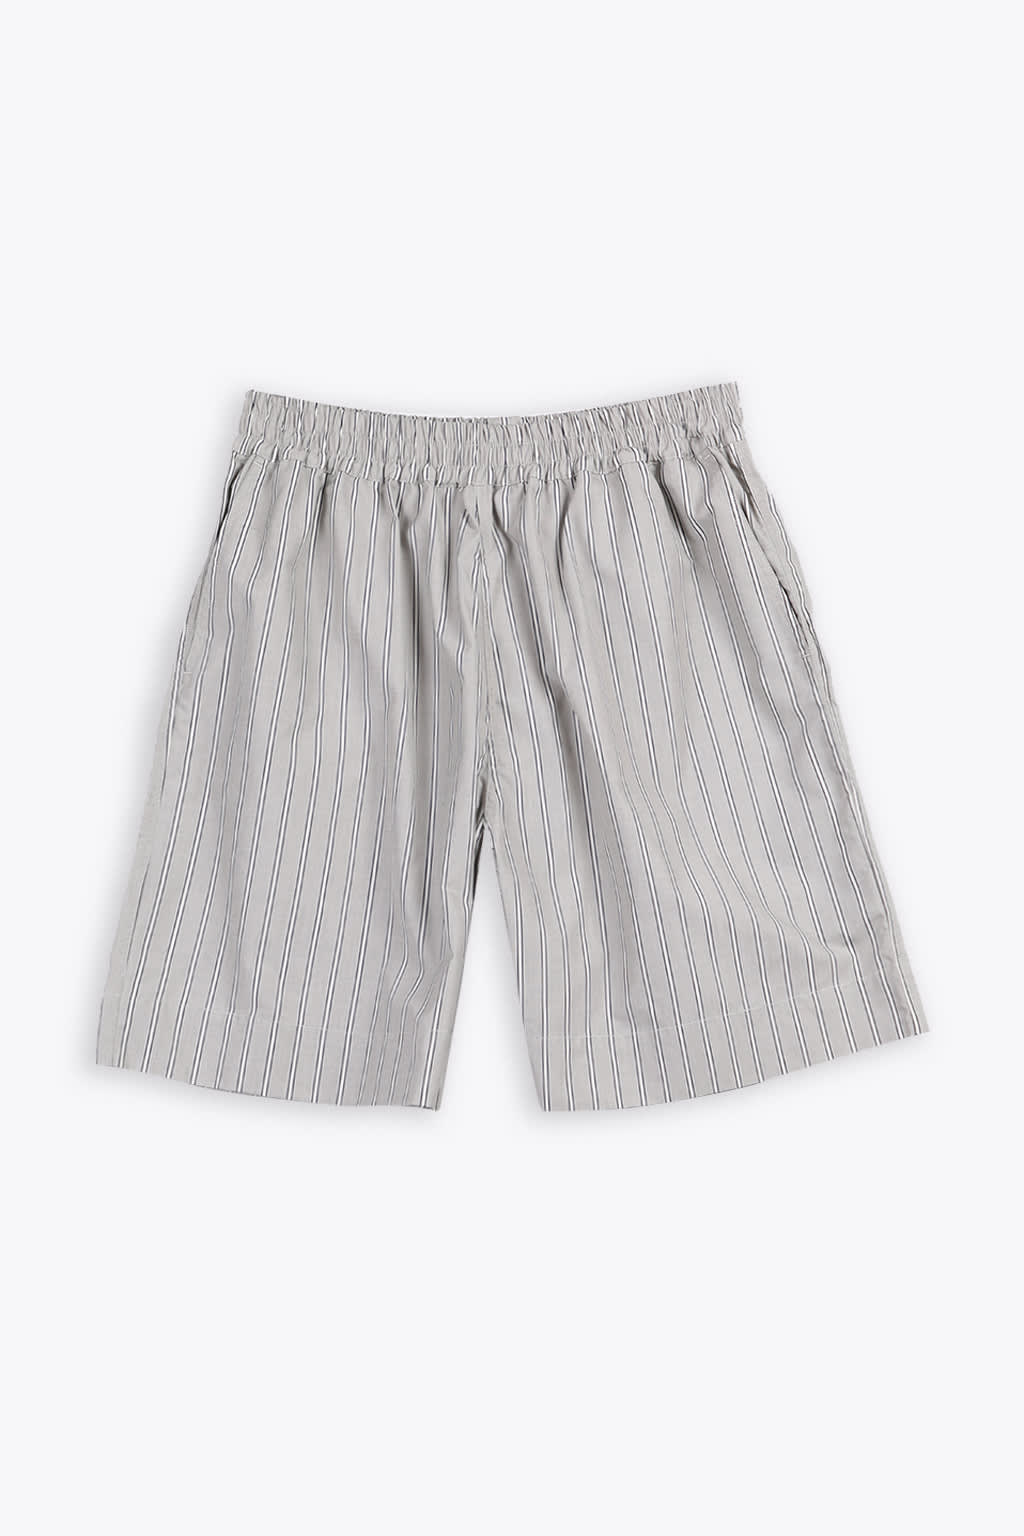 studio nicholson elasticated waist short striped grey poplin short - haul